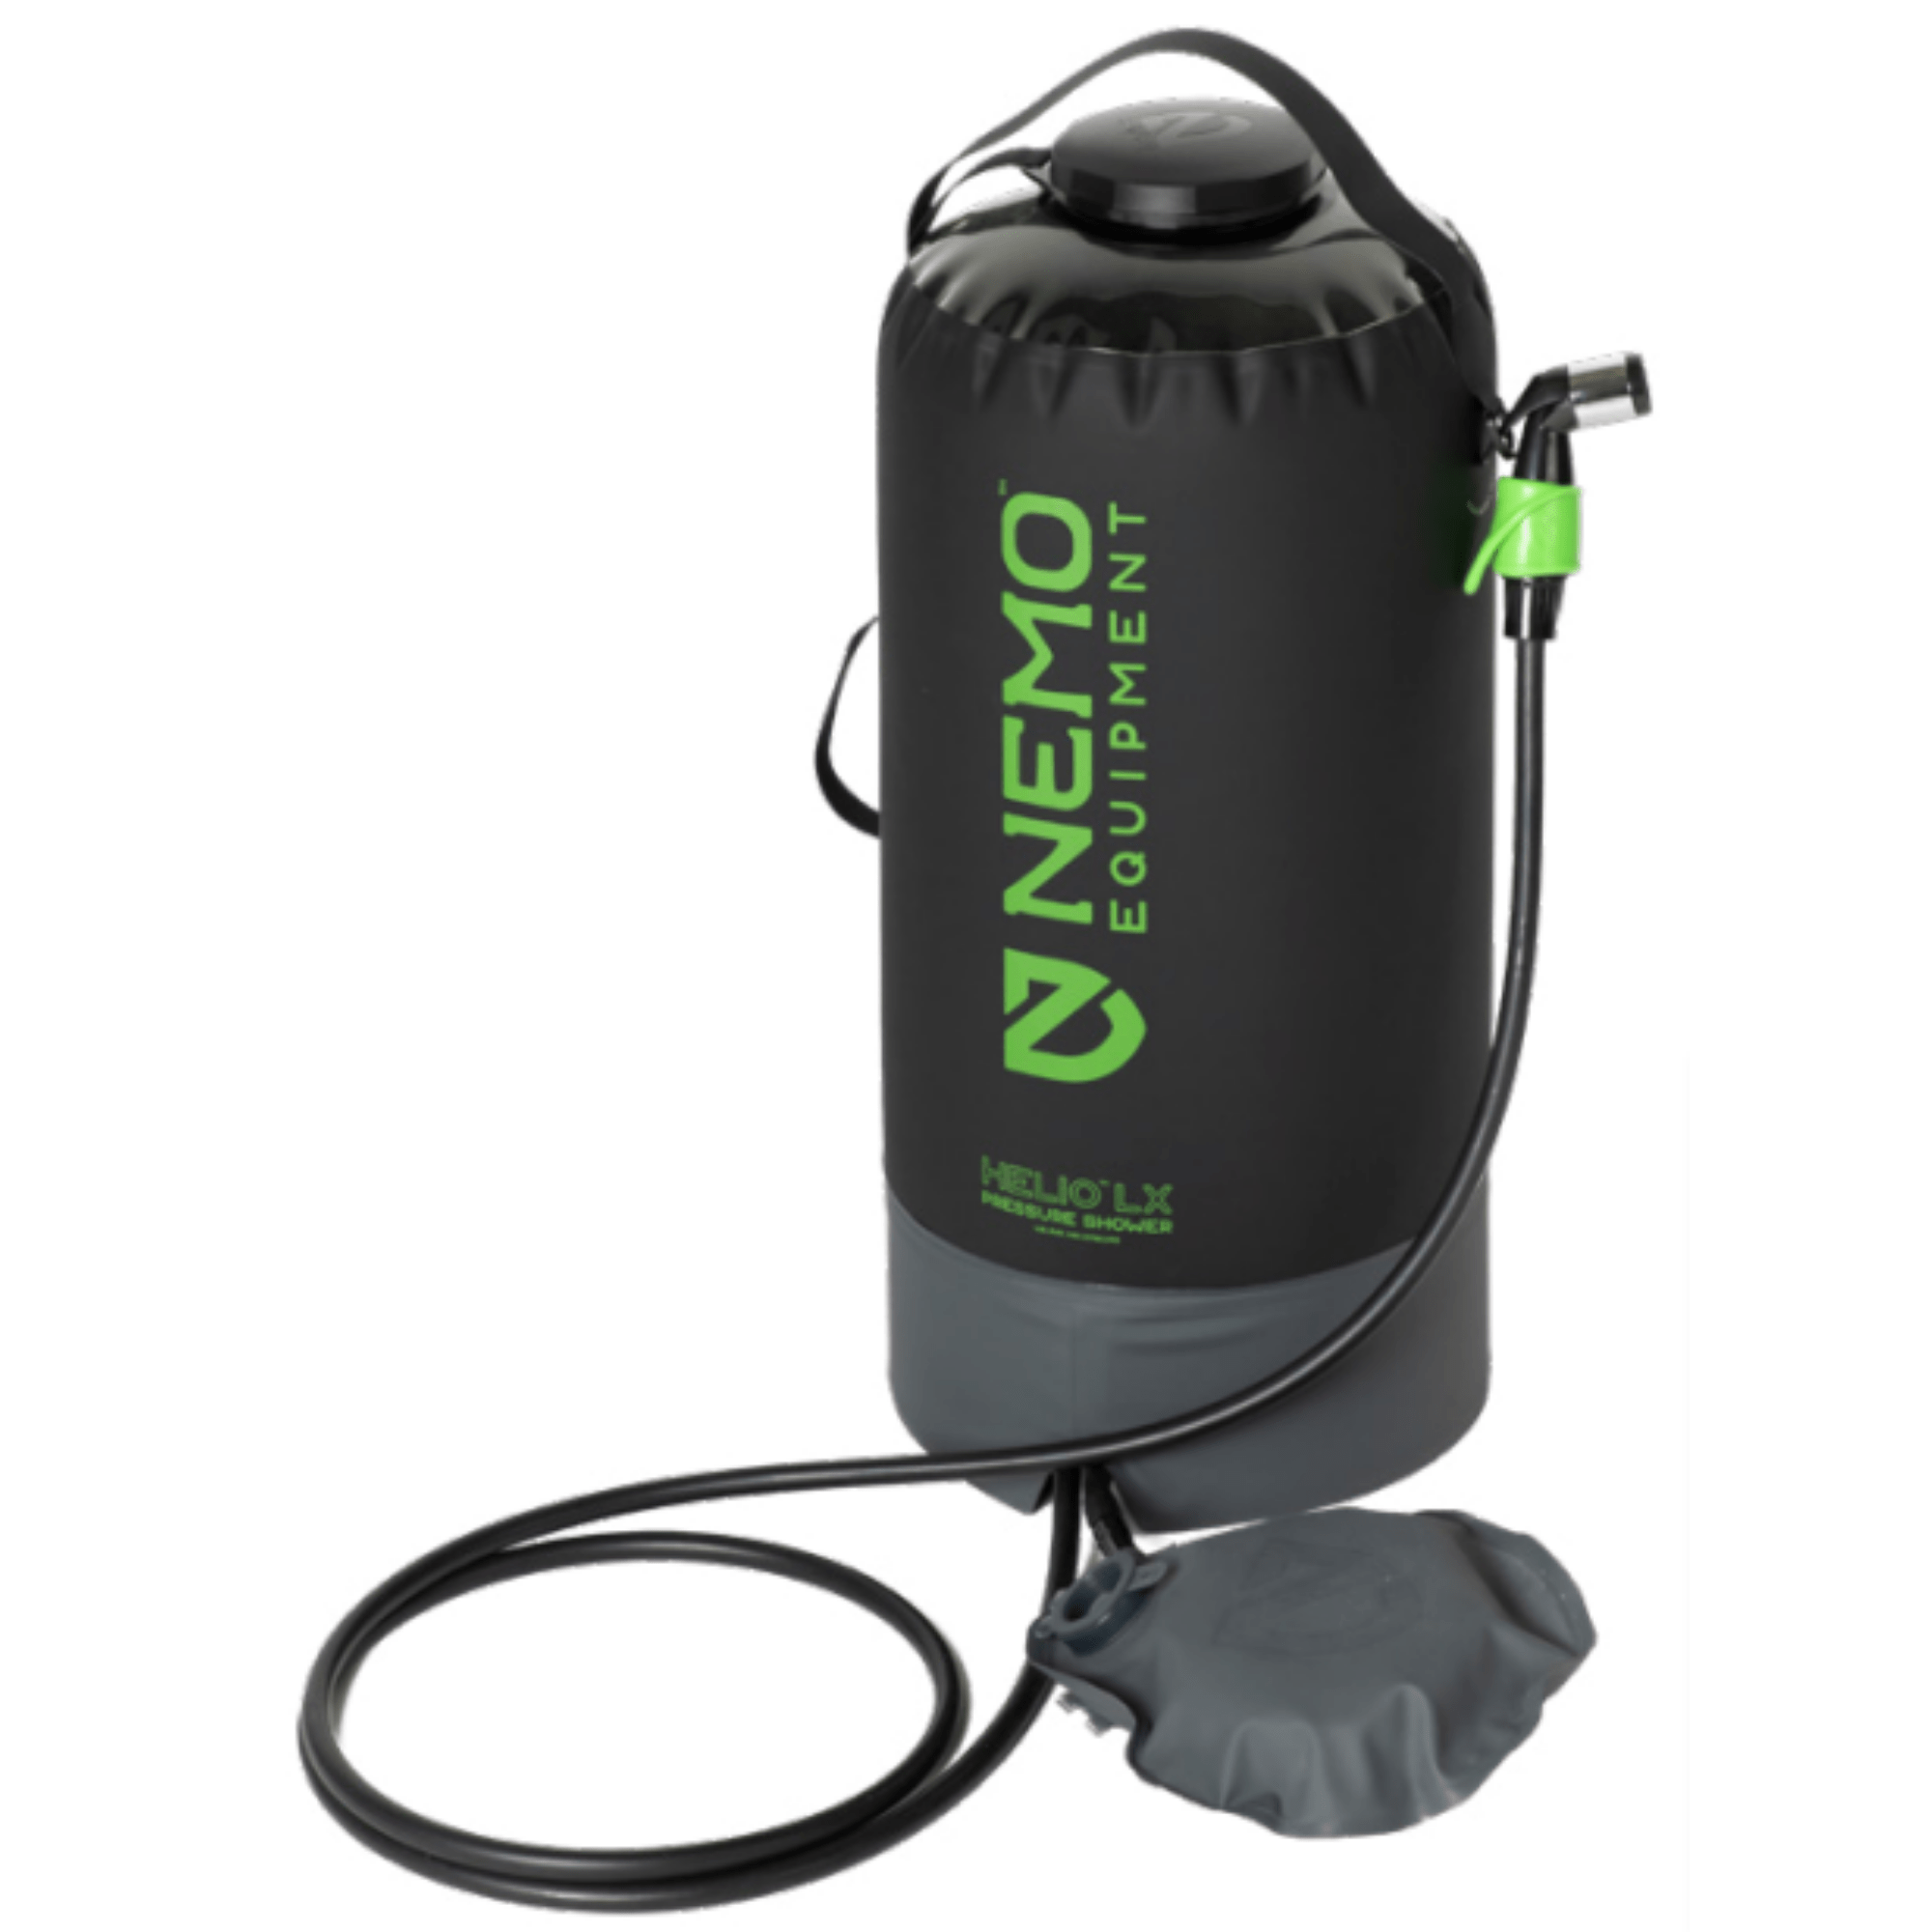 Nemo Shower Helio LX Pressure Shower NEM00262